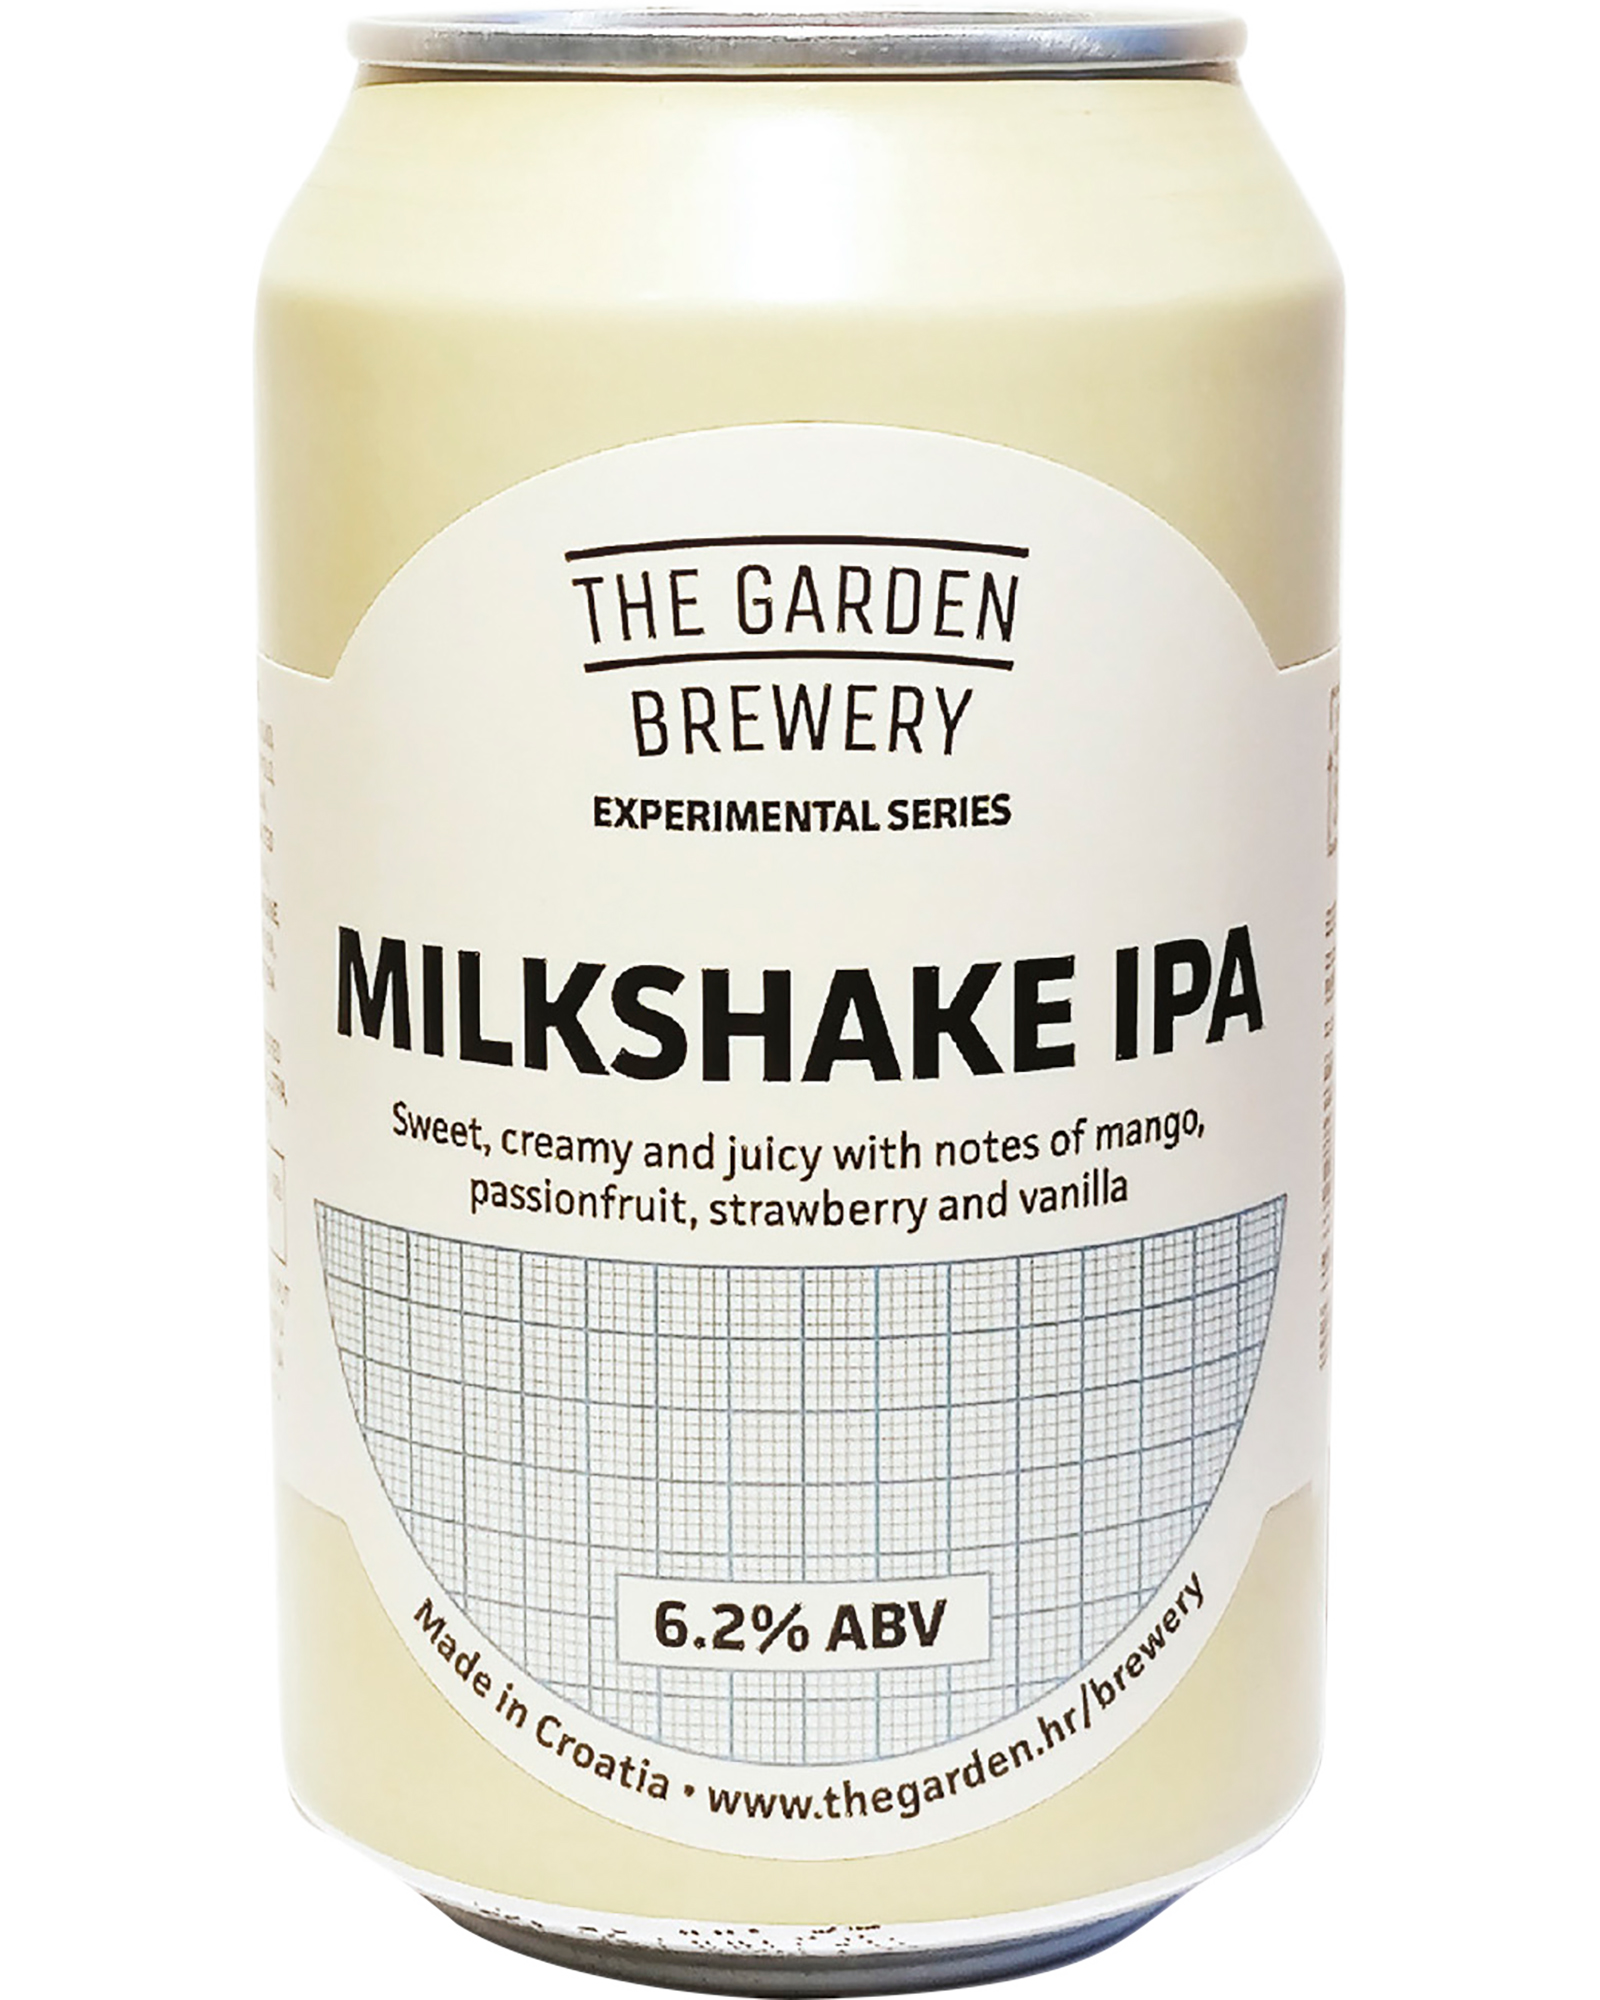 The Garden Brewery Milkshake IPA can